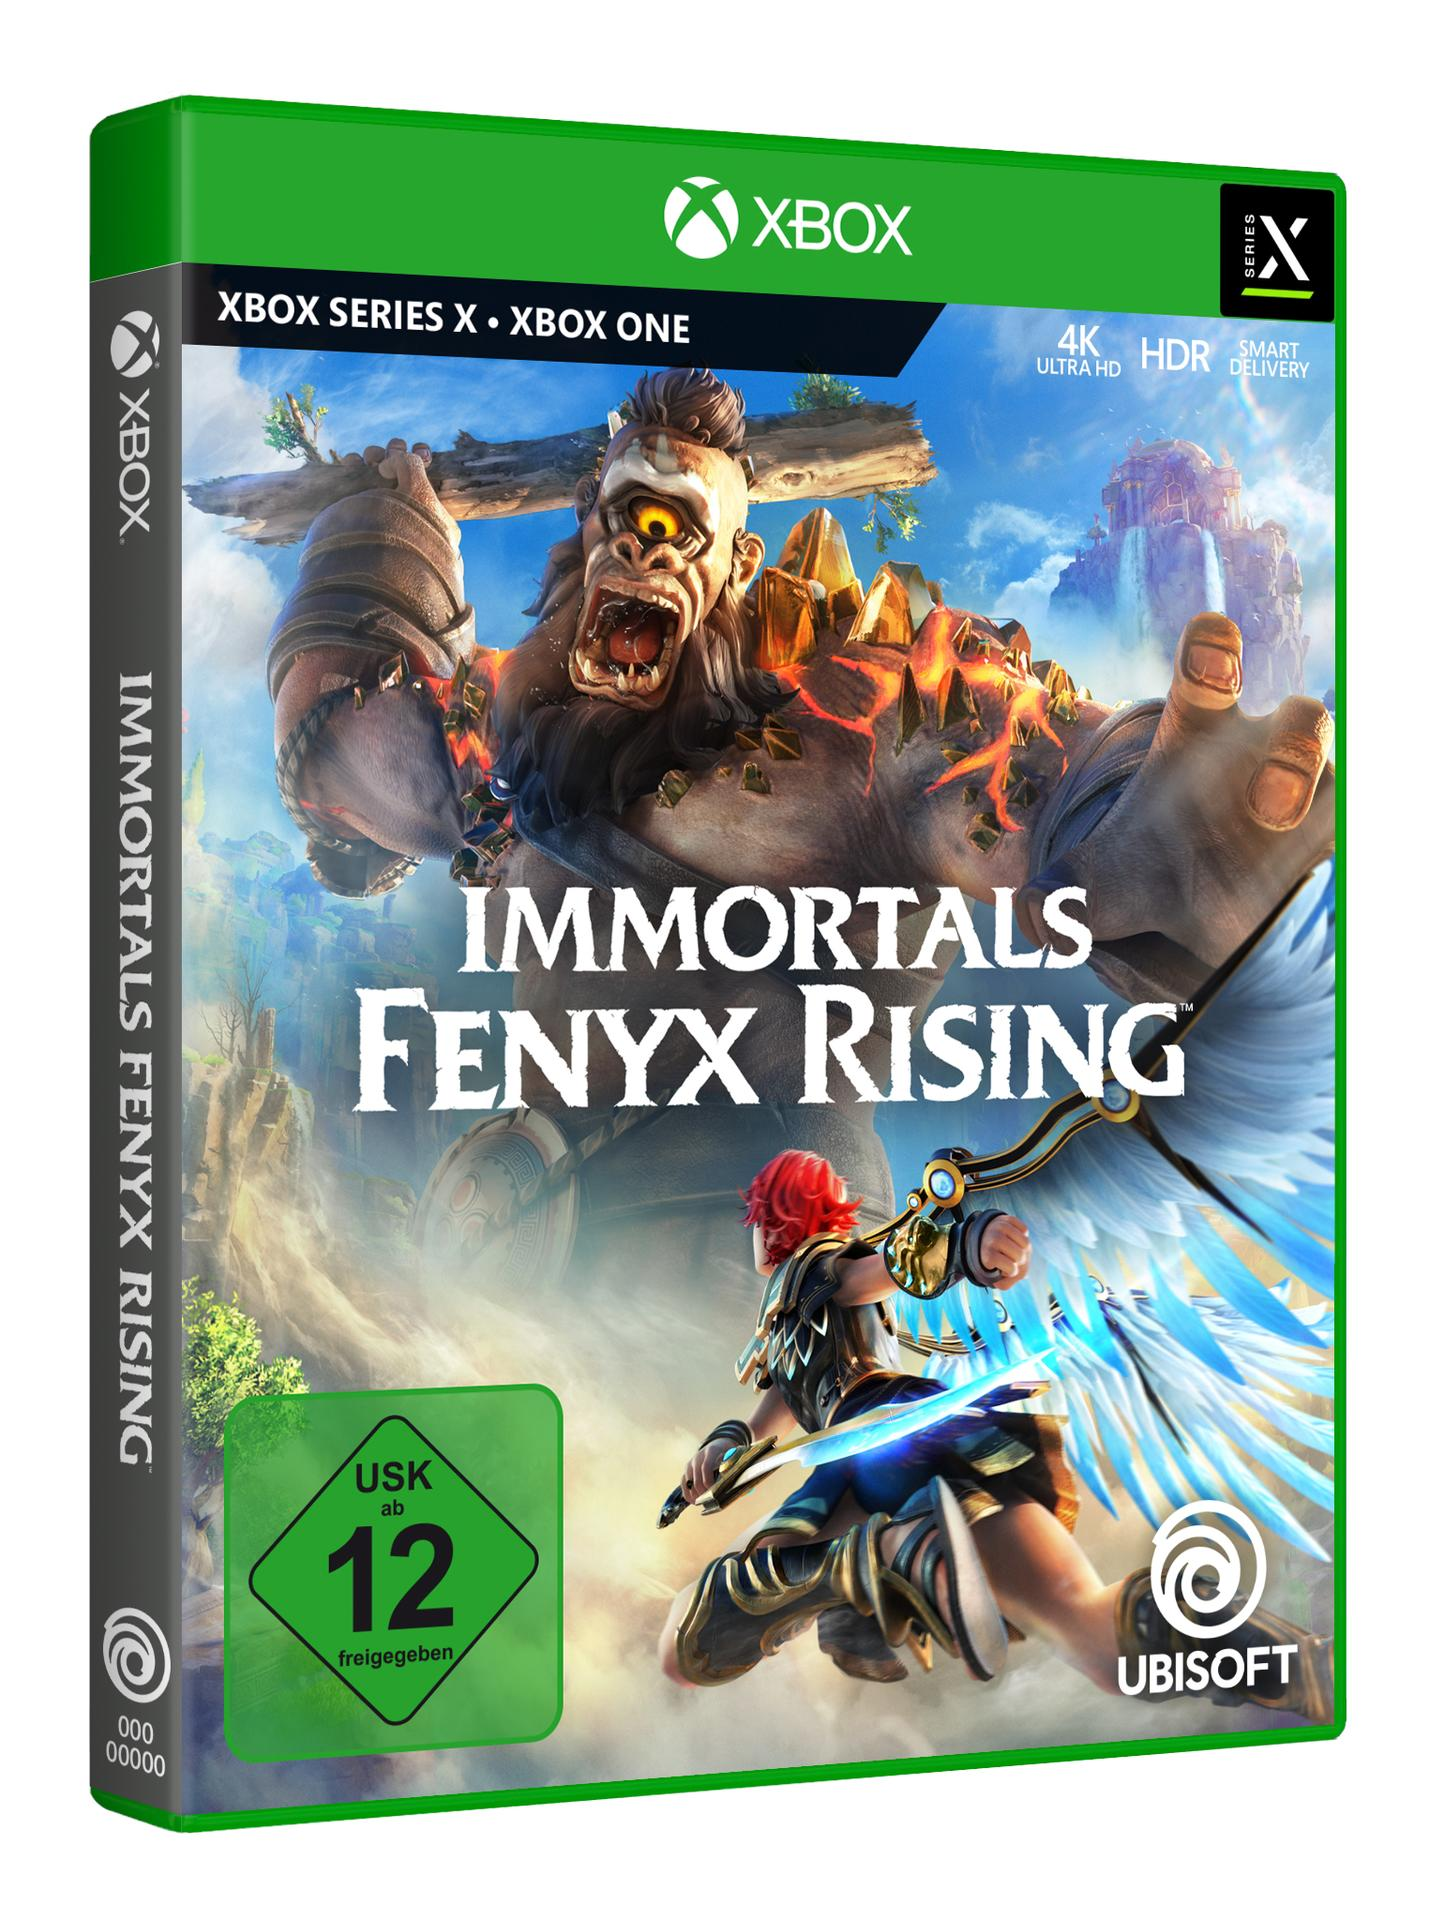 Immortals Fenyx Rising One X] - Xbox & Series [Xbox